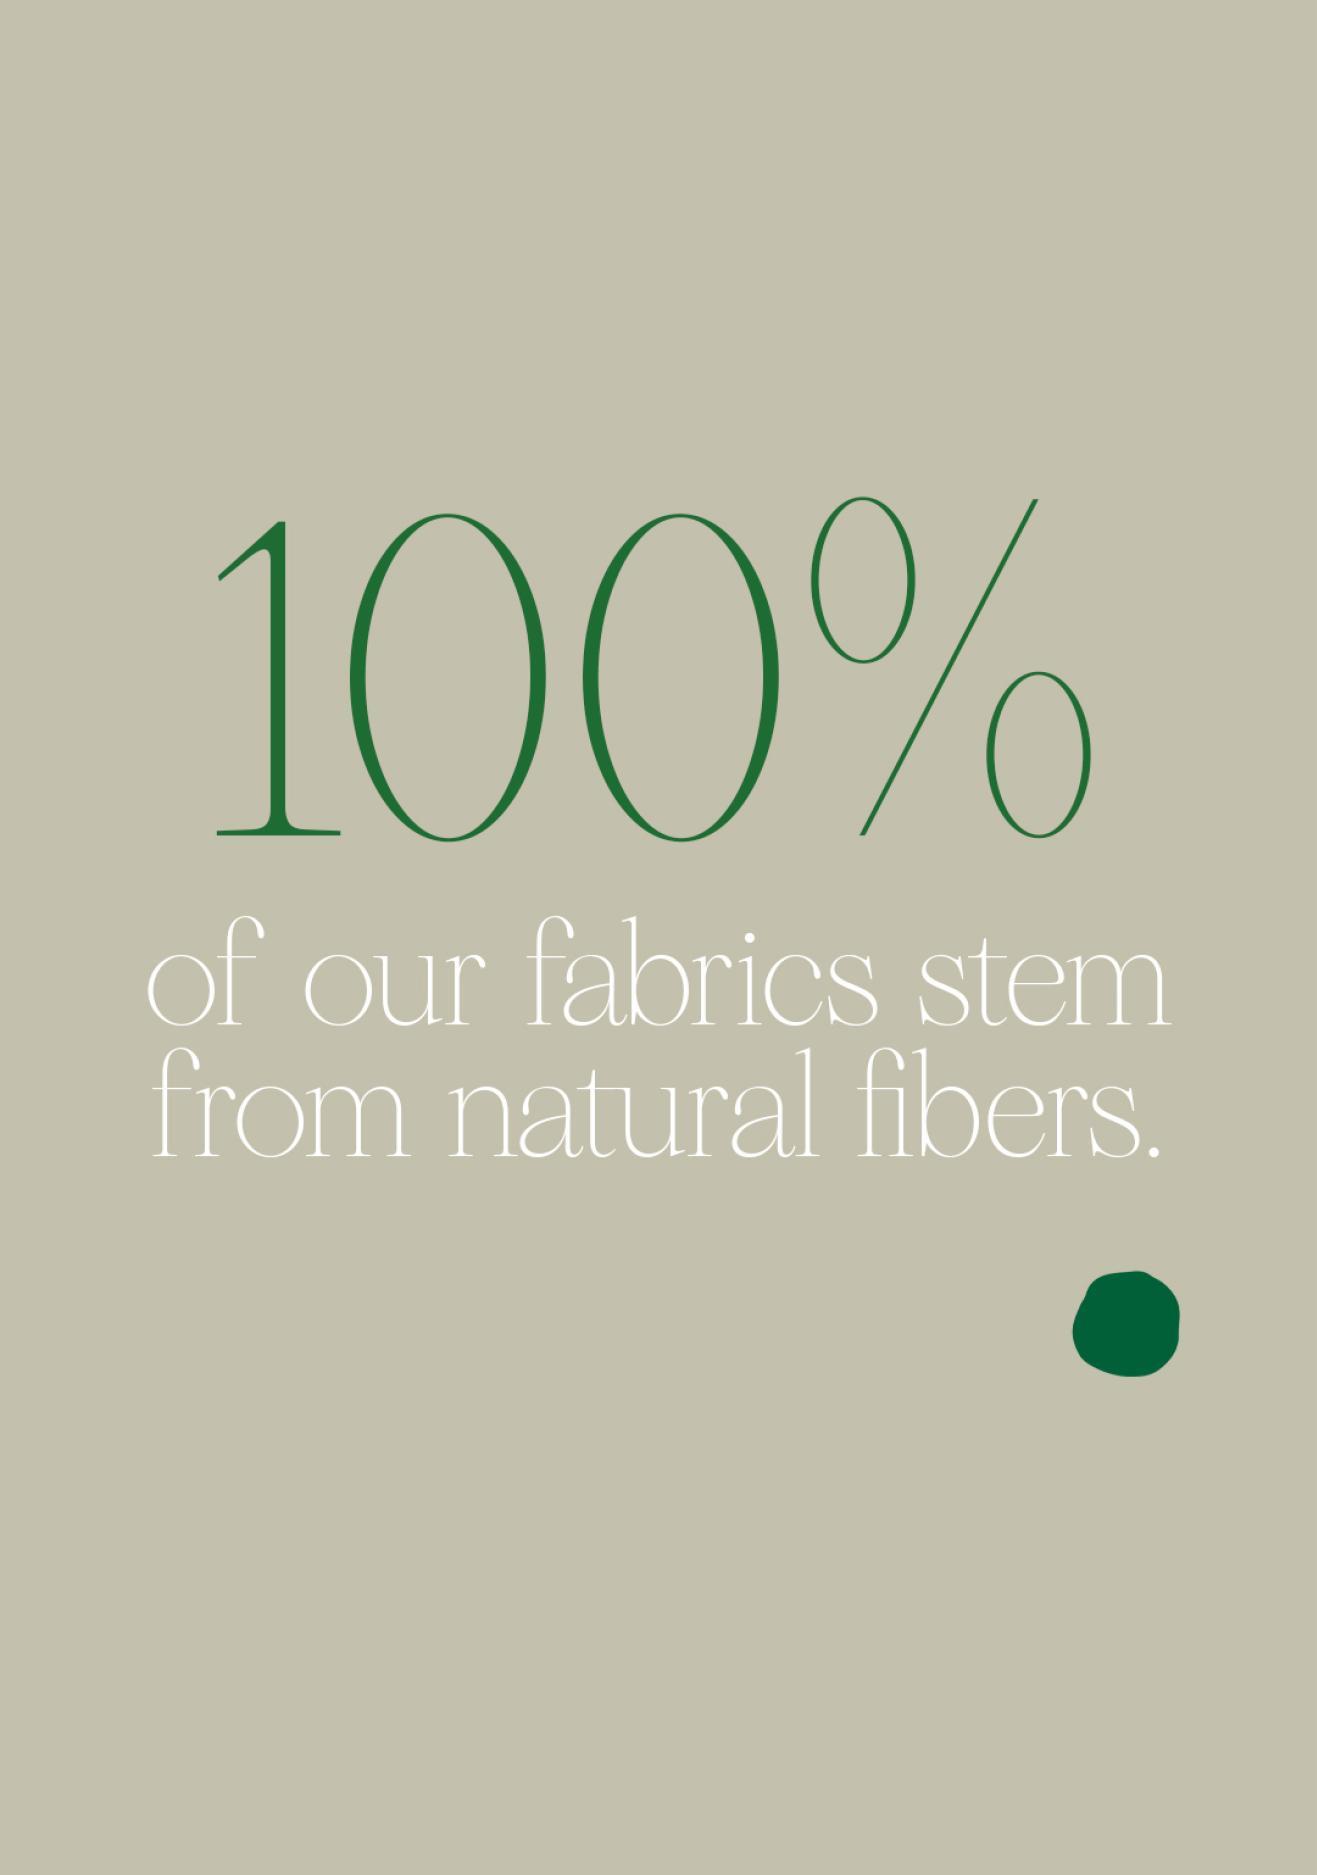 Fabrics stem from natural fibers